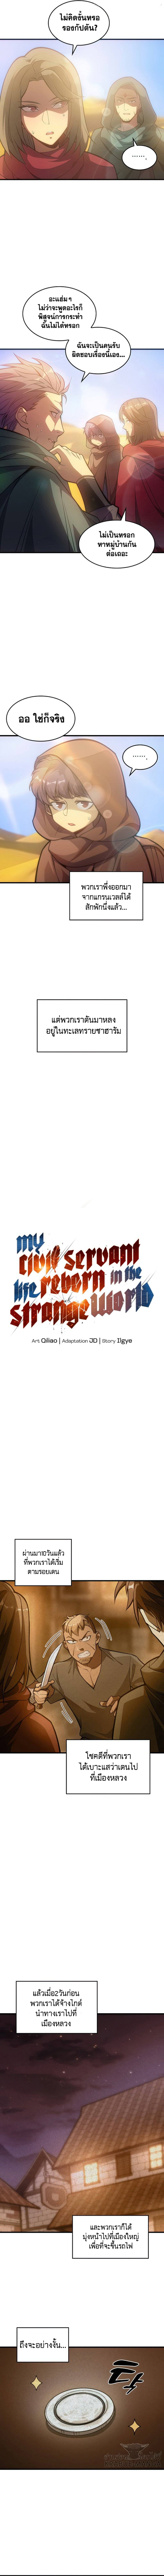 My Civil Servant Life Reborn In The Strange World30 (3)